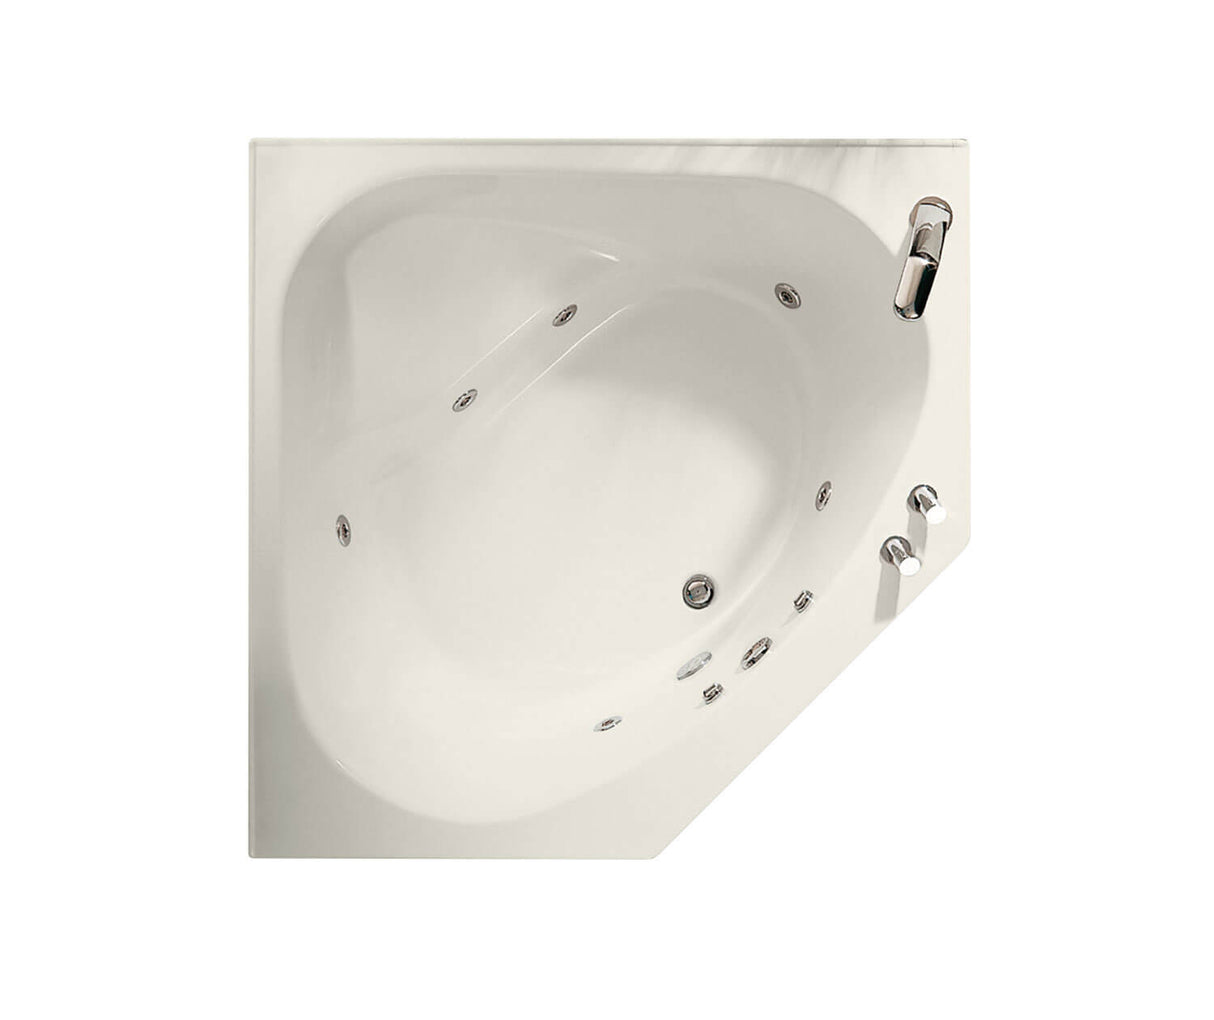 MAAX 100875-097-007 Tandem 5454 Acrylic Corner Center Drain Combined Whirlpool & Aeroeffect Bathtub in Biscuit